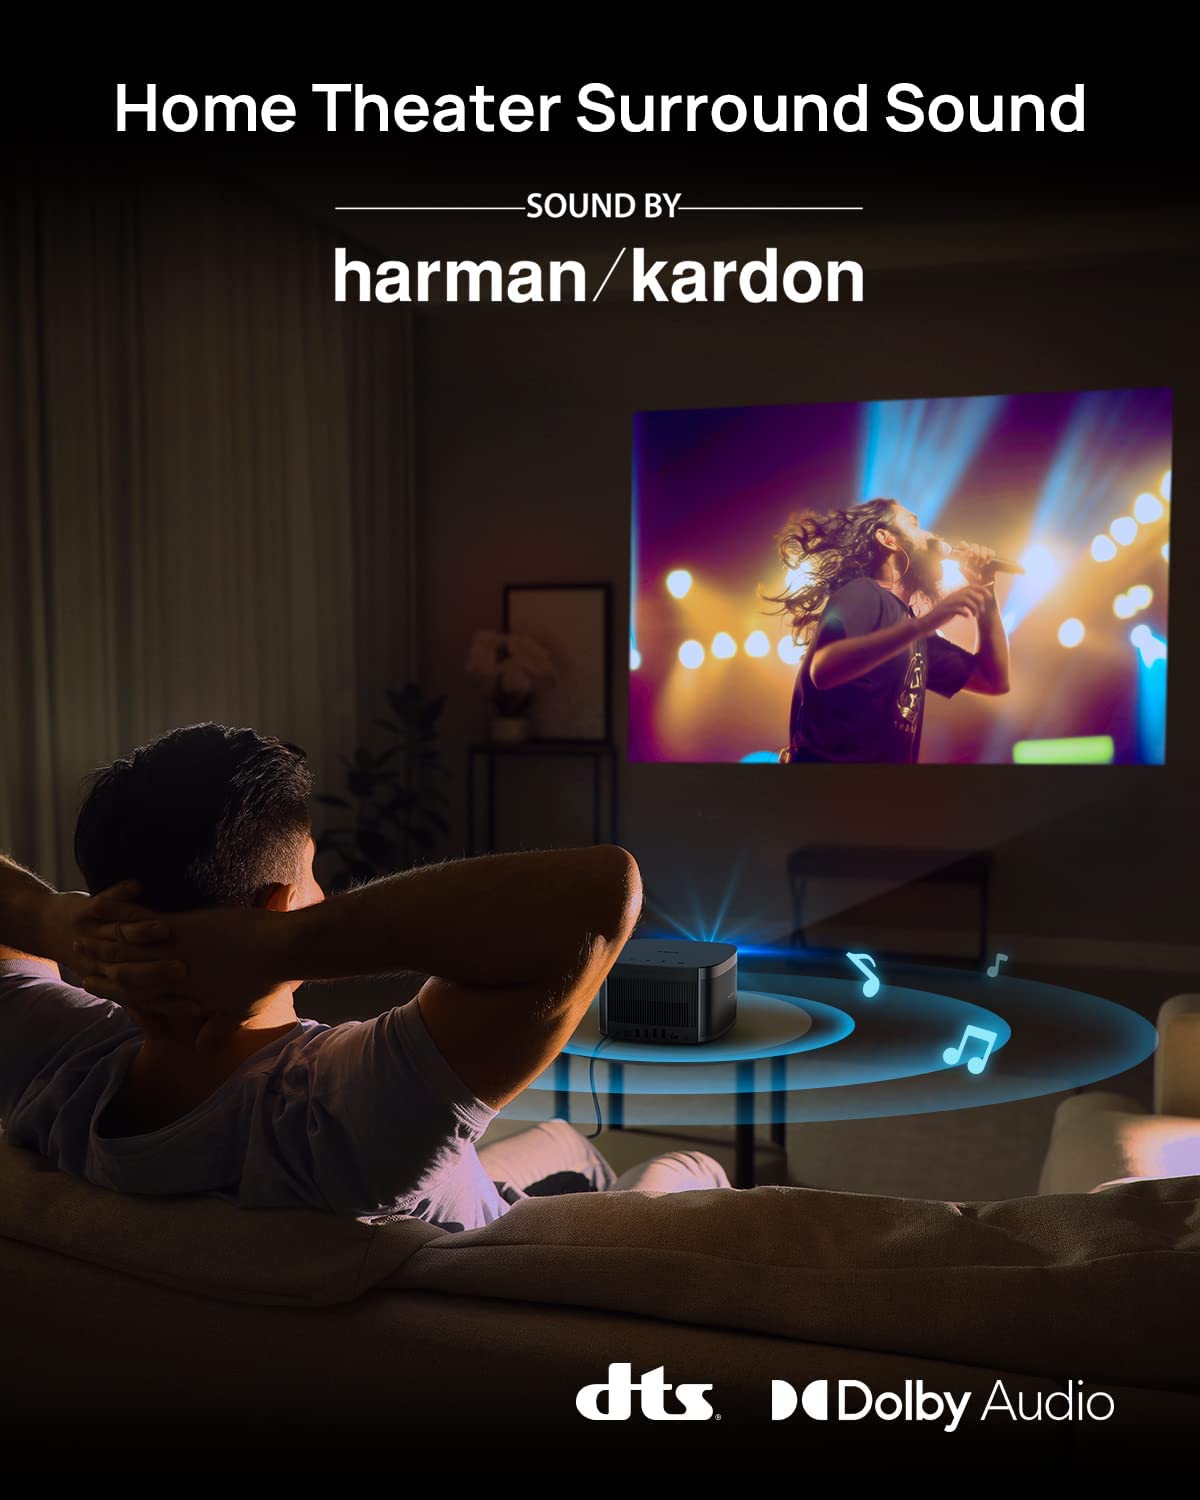 XGIMI Horizon Pro 4K Projector, 2200 ANSI Lumens, Android TV 10.0 Movie...